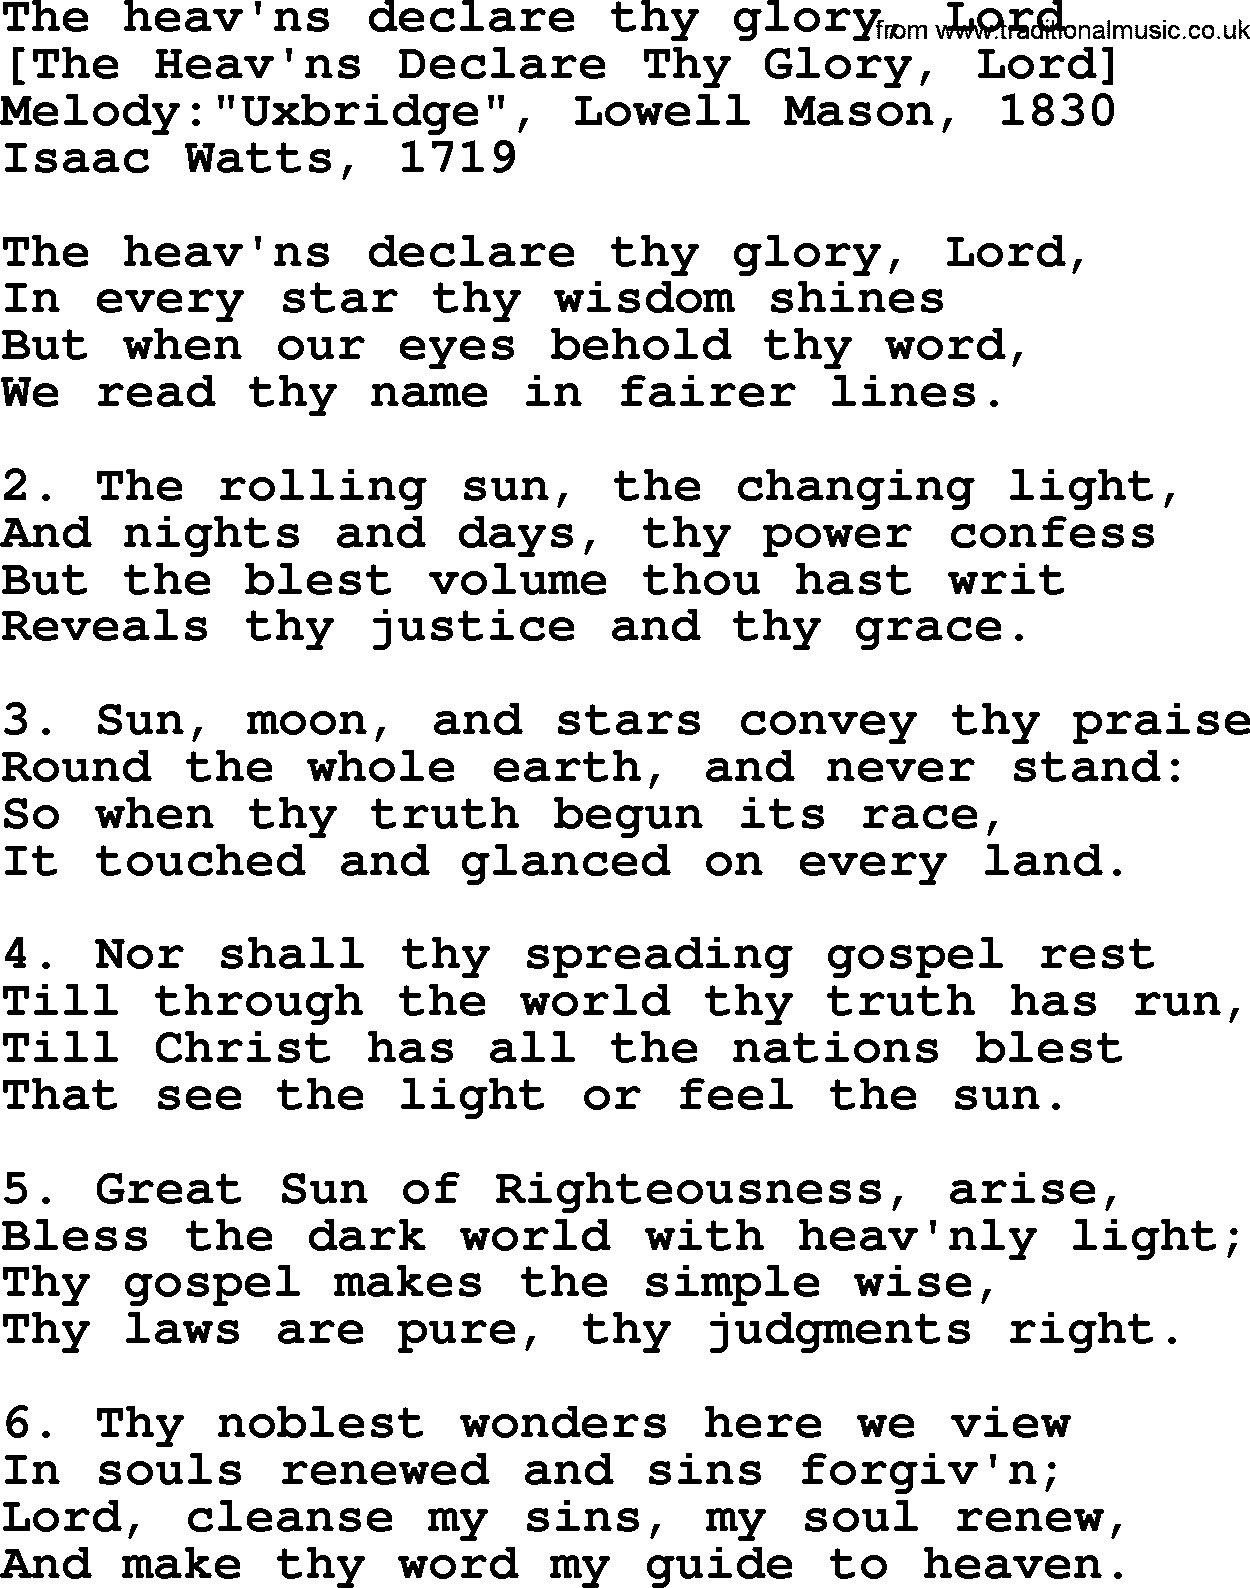 Old English Song: The Heav'ns Declare Thy Glory, Lord lyrics